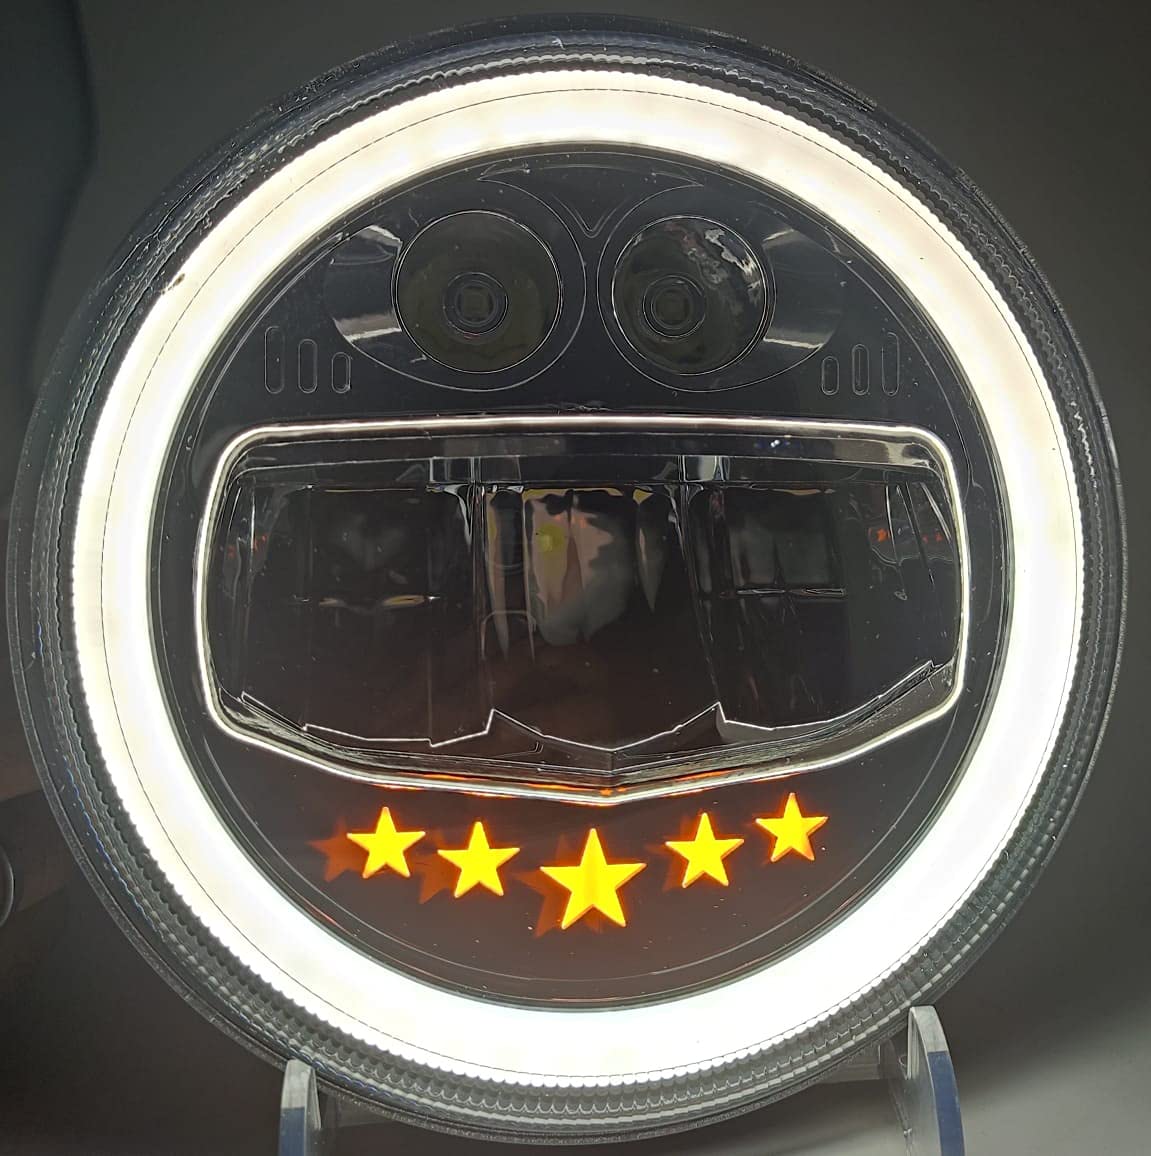 ROYAL ERADO 7" 5 STAR head light for royal enfield classic , electra , standard